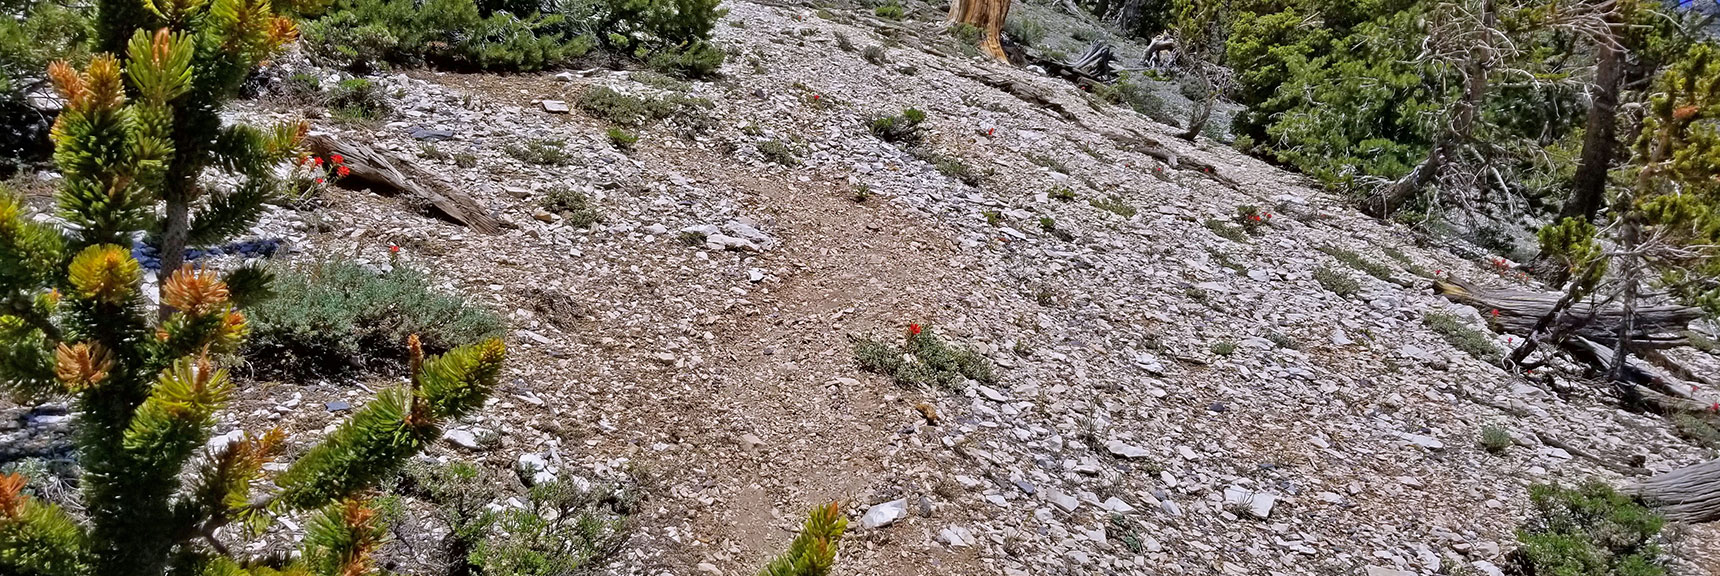 Faint Summit Trail Winds Around Toward Final Approach Amid Bristlecone Pines | Macks Peak | Mt Charleston Wilderness | Spring Mountains, Nevada